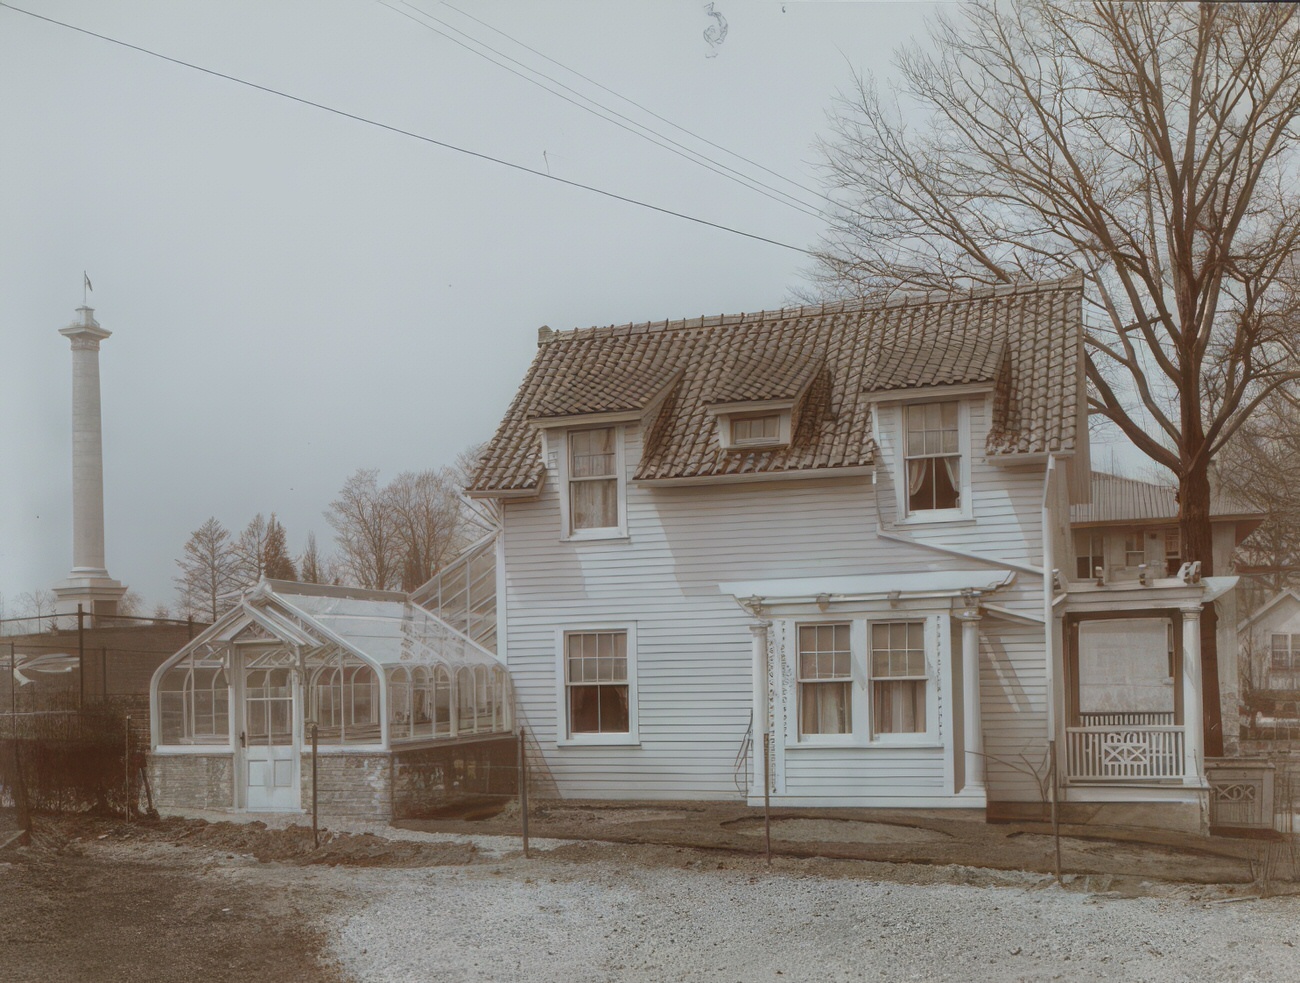 Residence Of Wm. Muschenheim, Circa 1910.